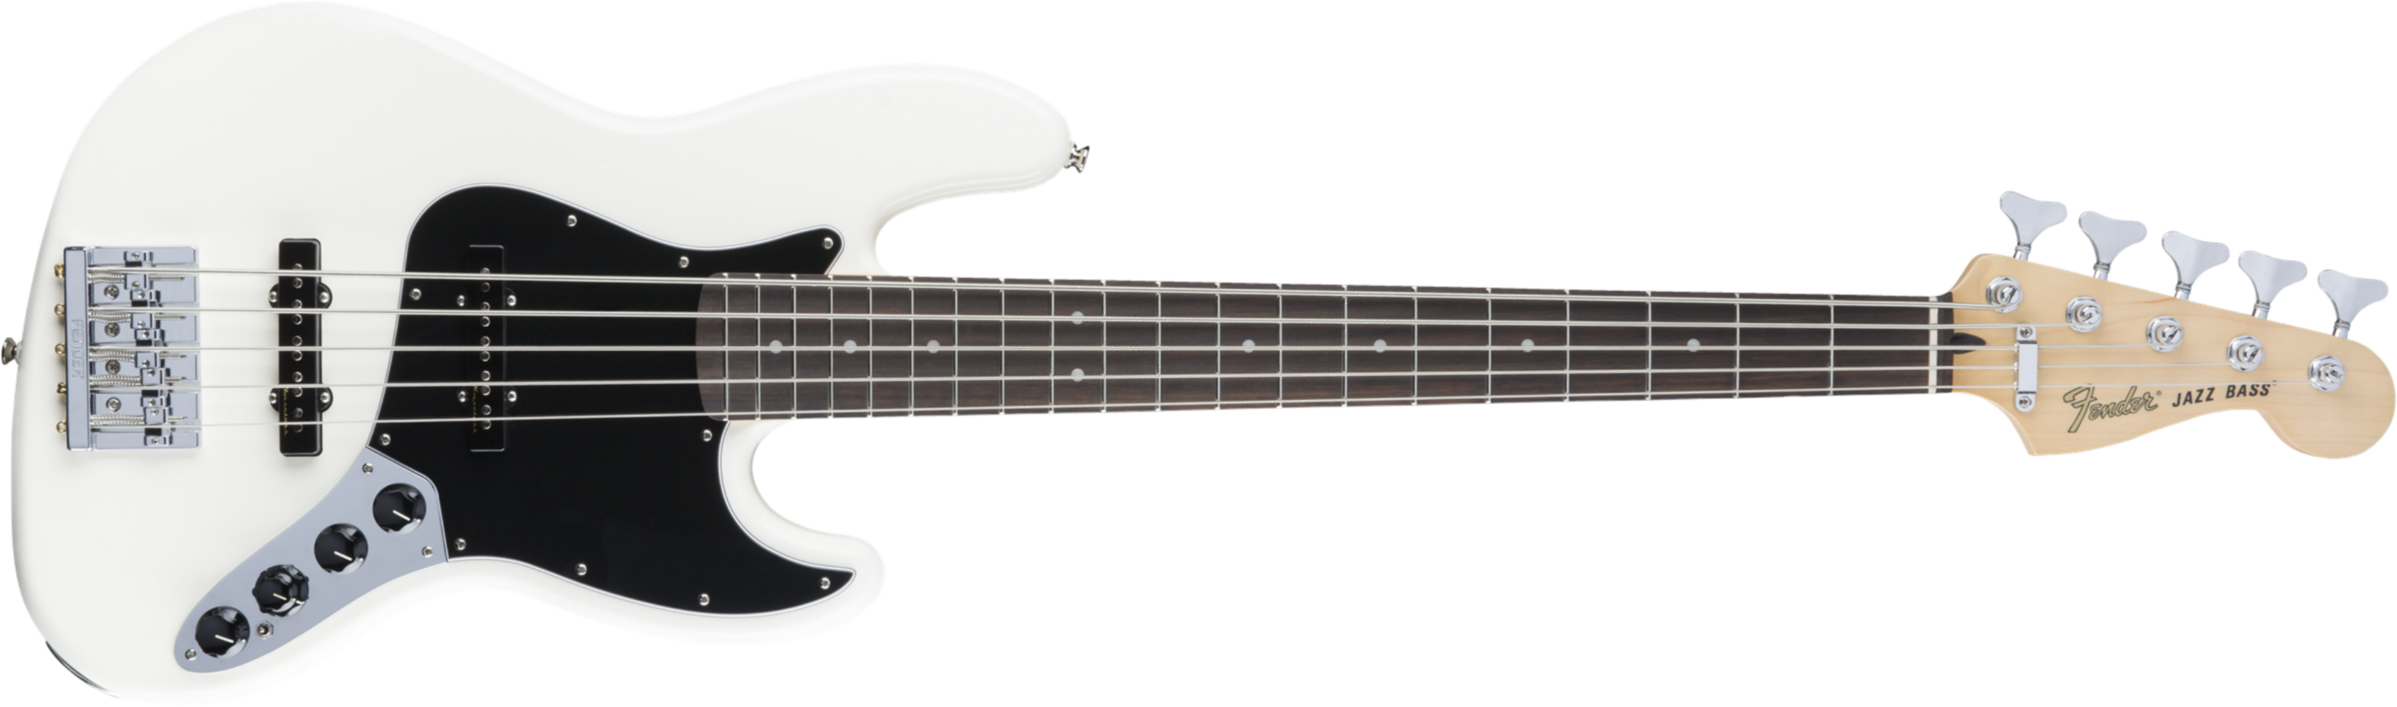 Fender Jazz Bass Deluxe Active Pf - Olympic White - Bajo eléctrico de cuerpo sólido - Main picture